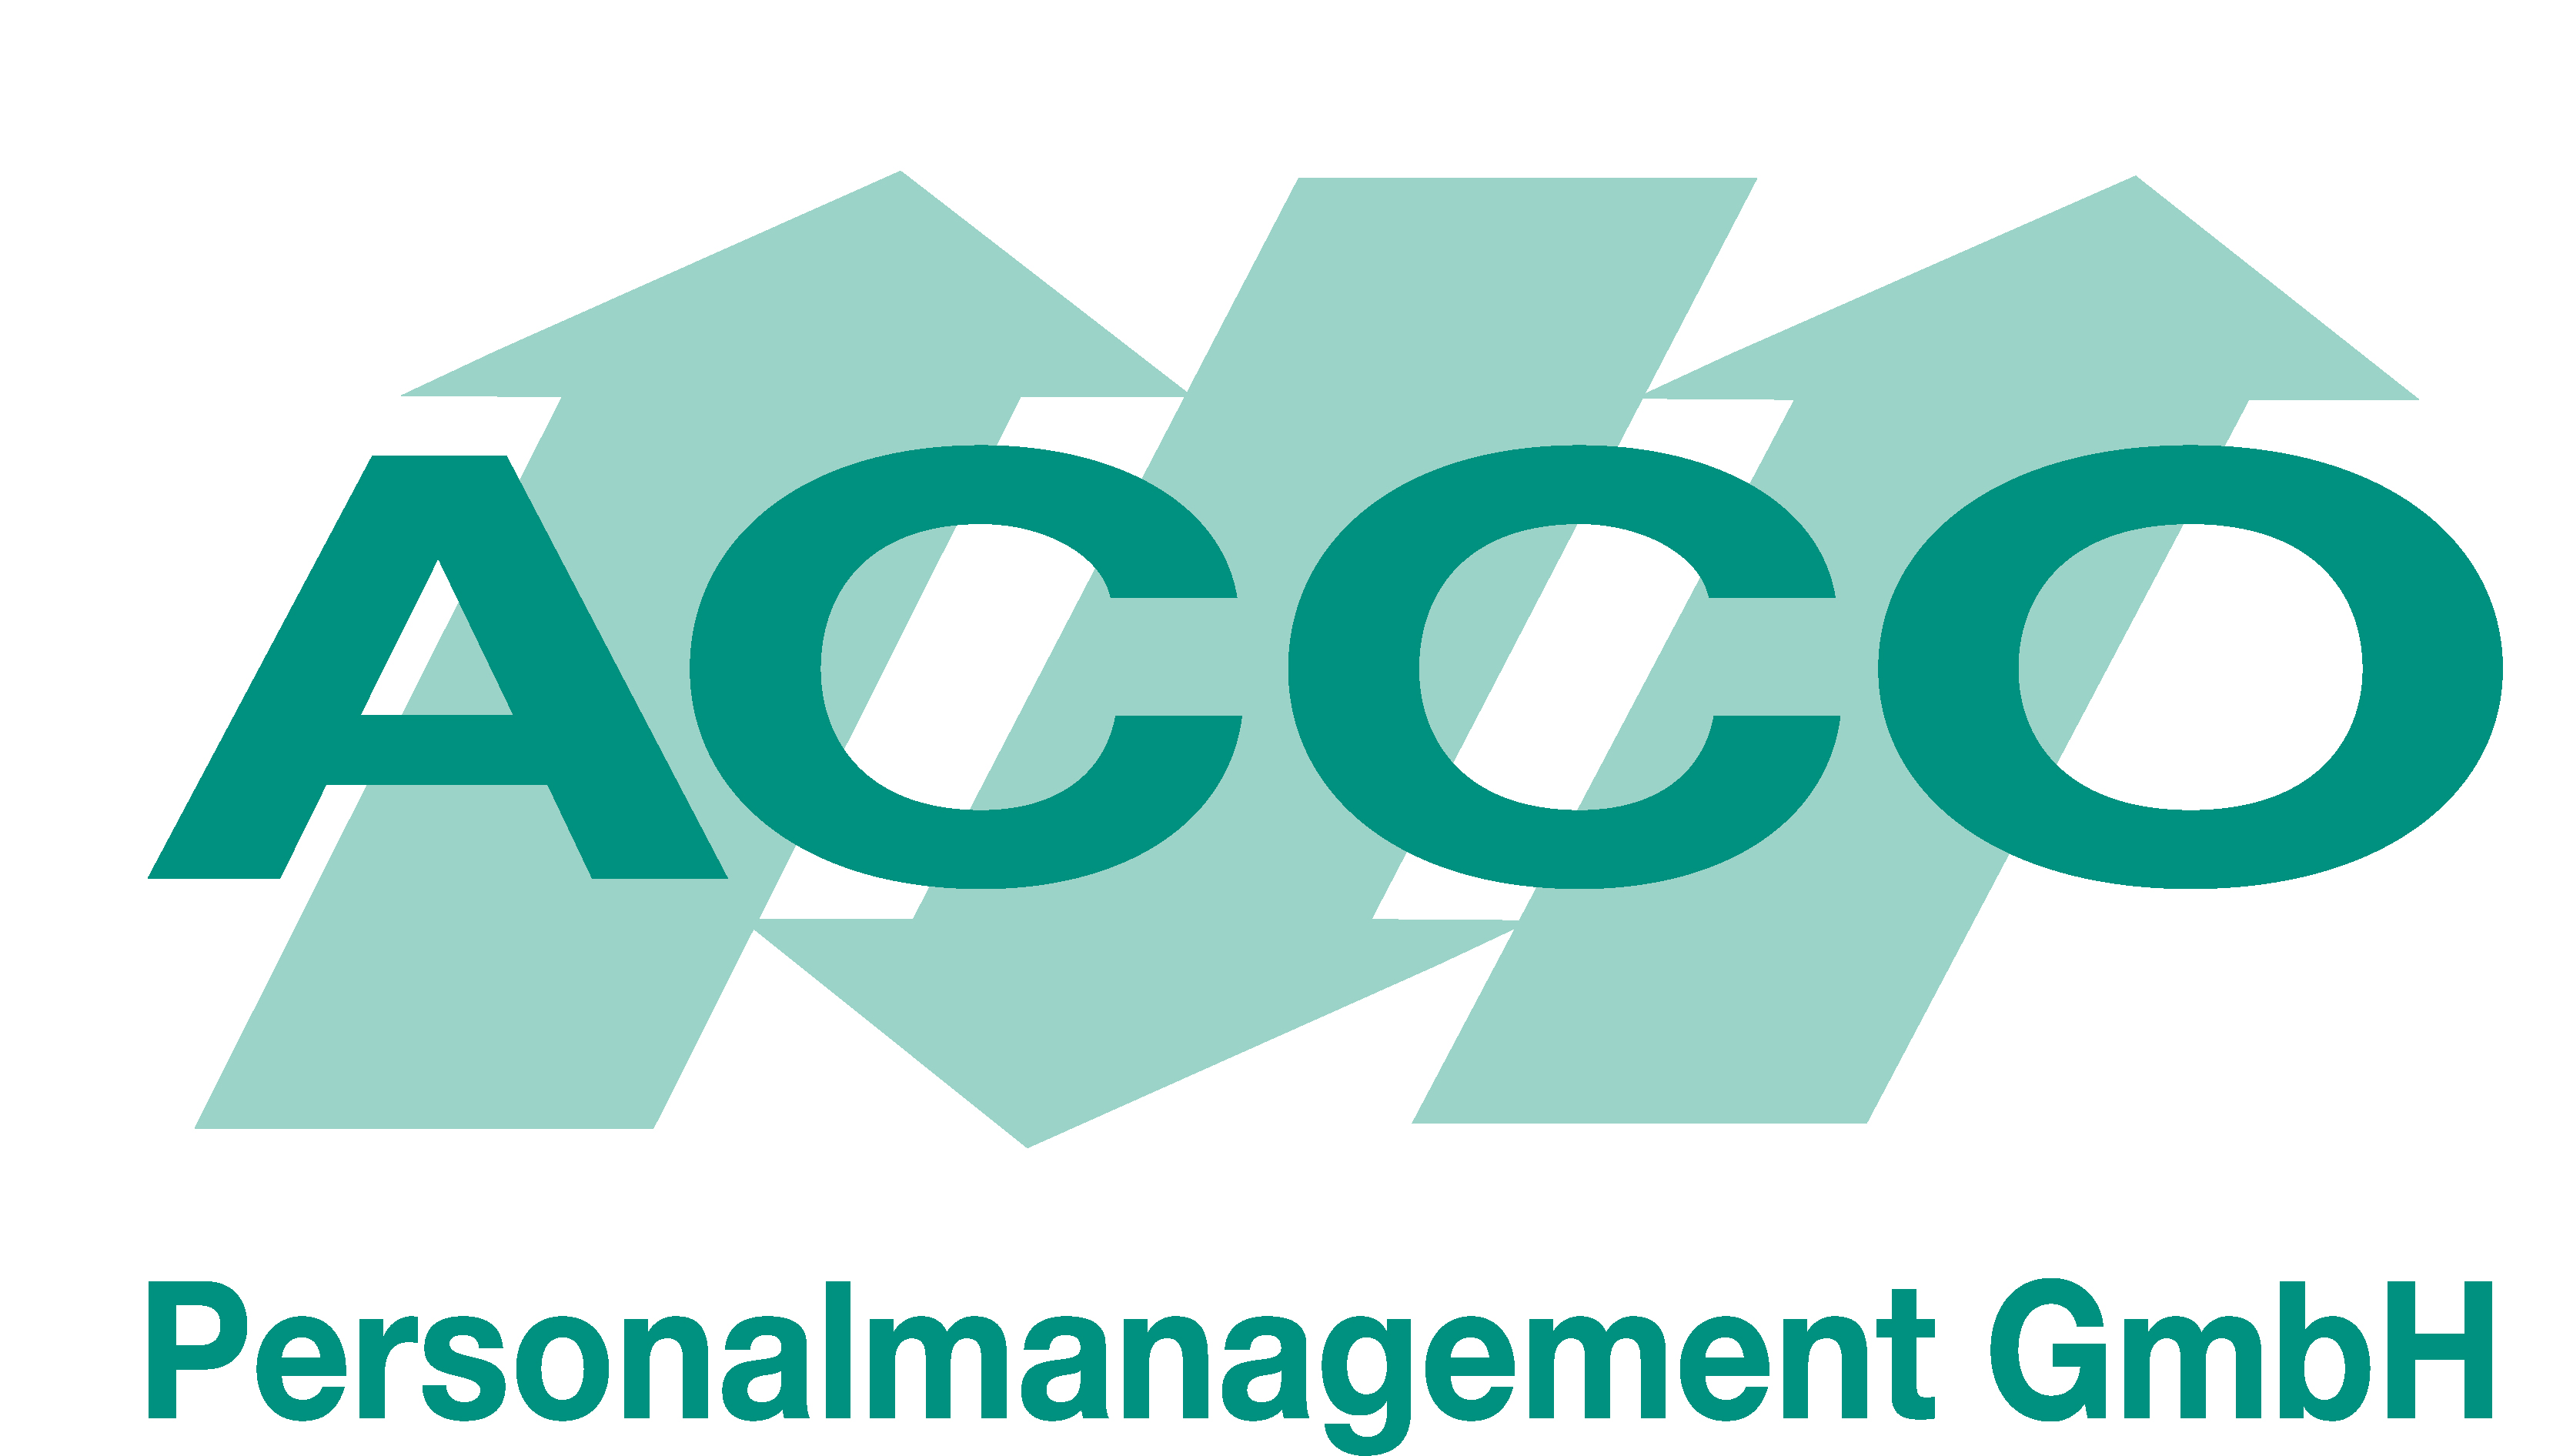 ACCO Logo 2018 hg